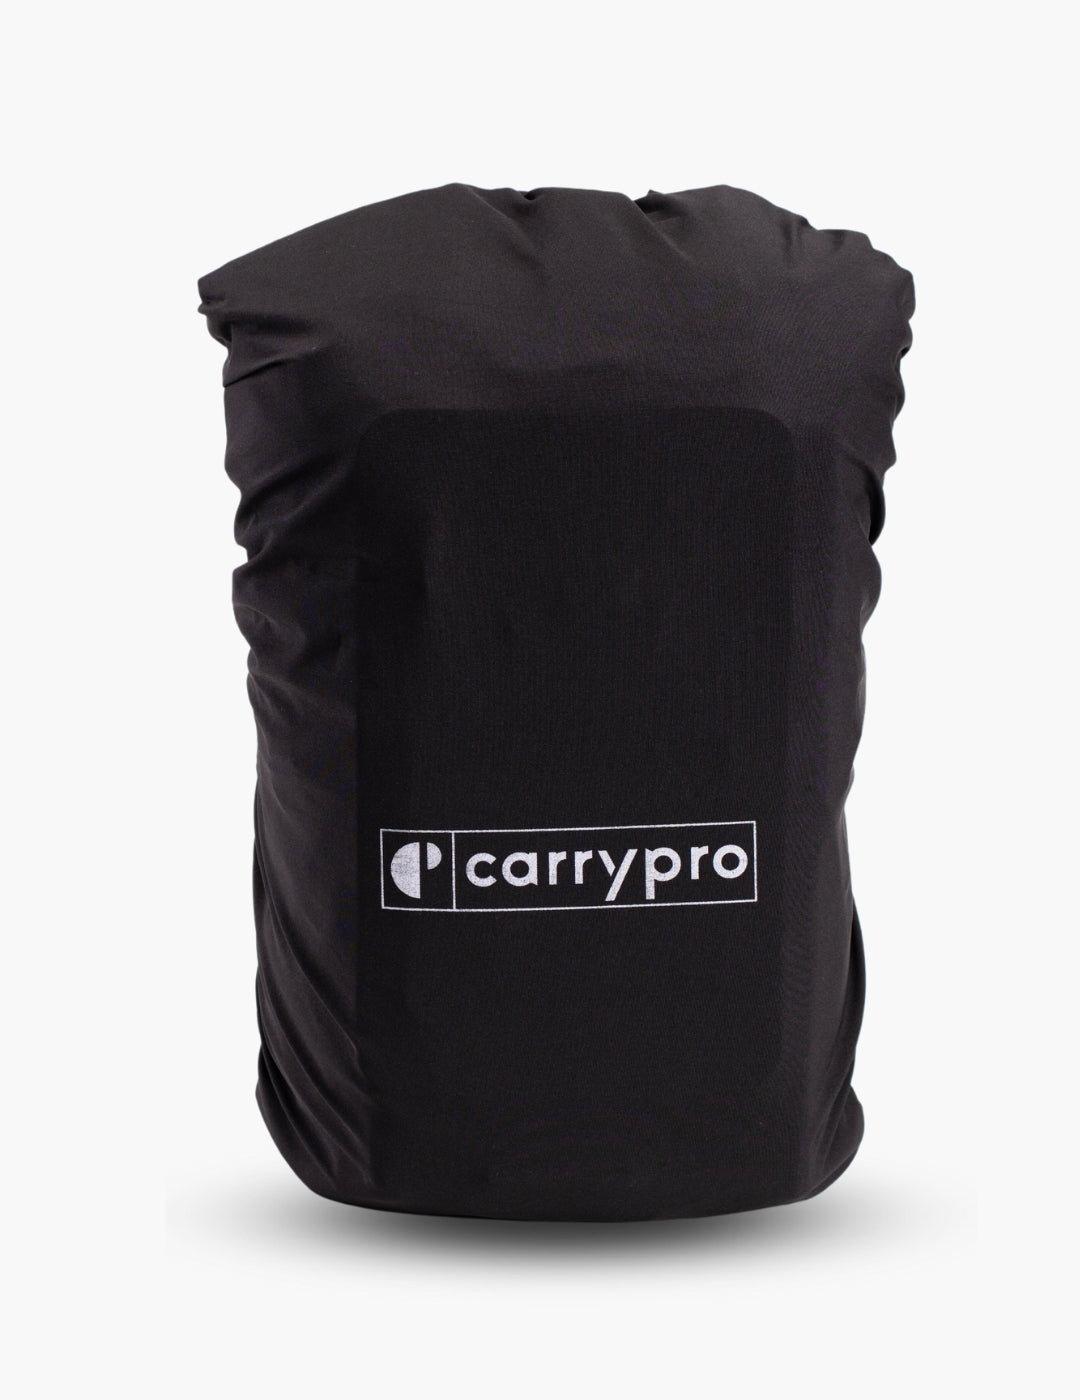 PRO Rain & Dust Cover for Backpack